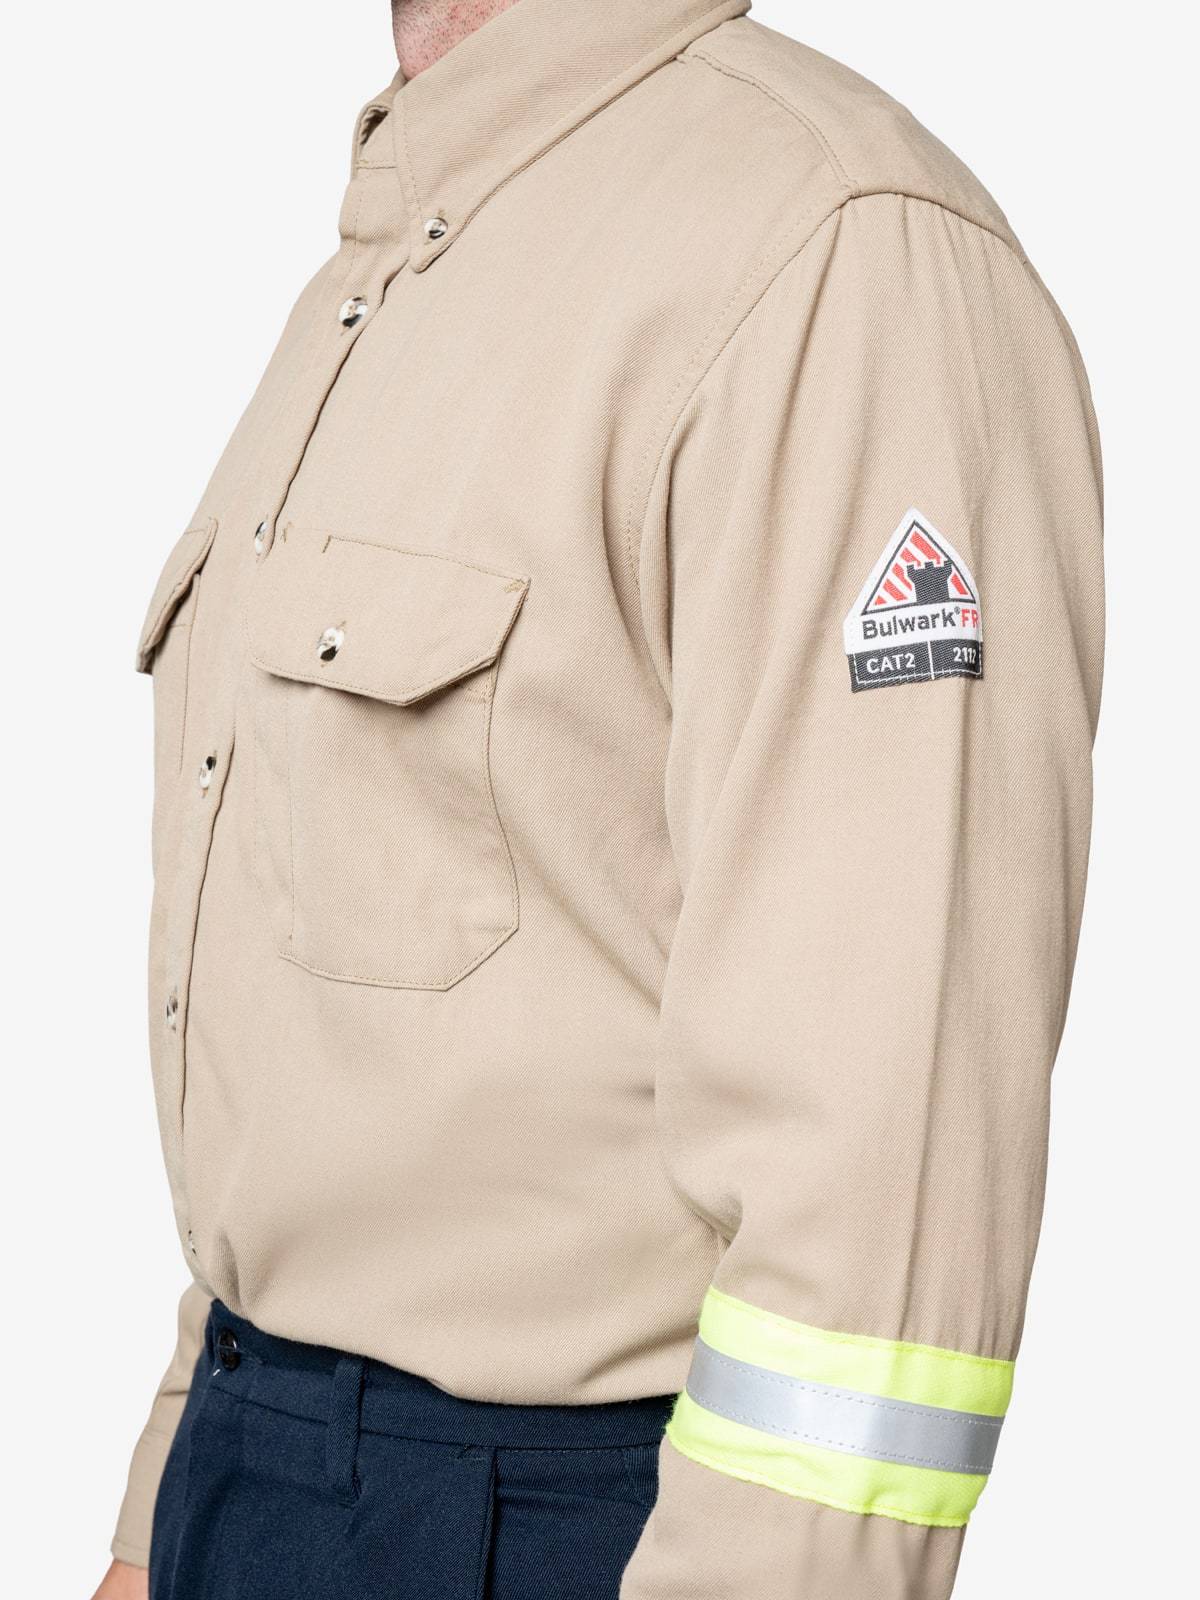 Insect Shield Men's 7 oz. Tecasafe® Flame Resistant Uniform Shirt w/ Hi-Vis